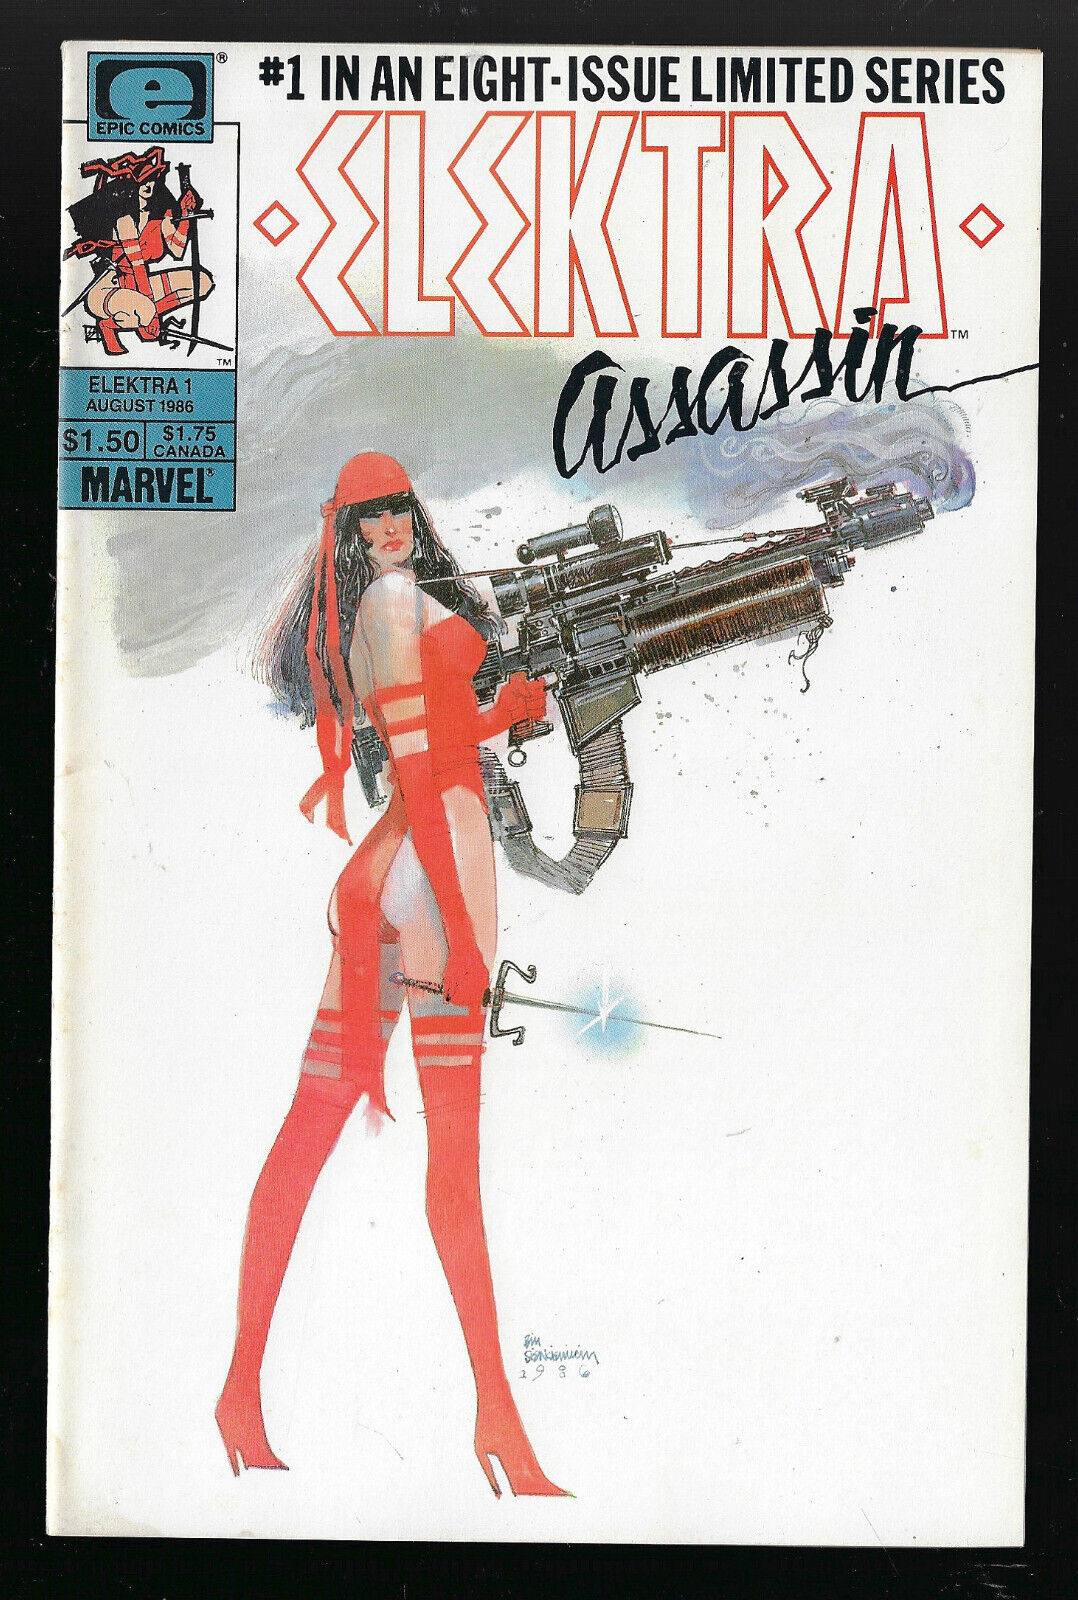 Elektra, Assasin #1 - Marvel, 1986  $5 ships unlimited comics